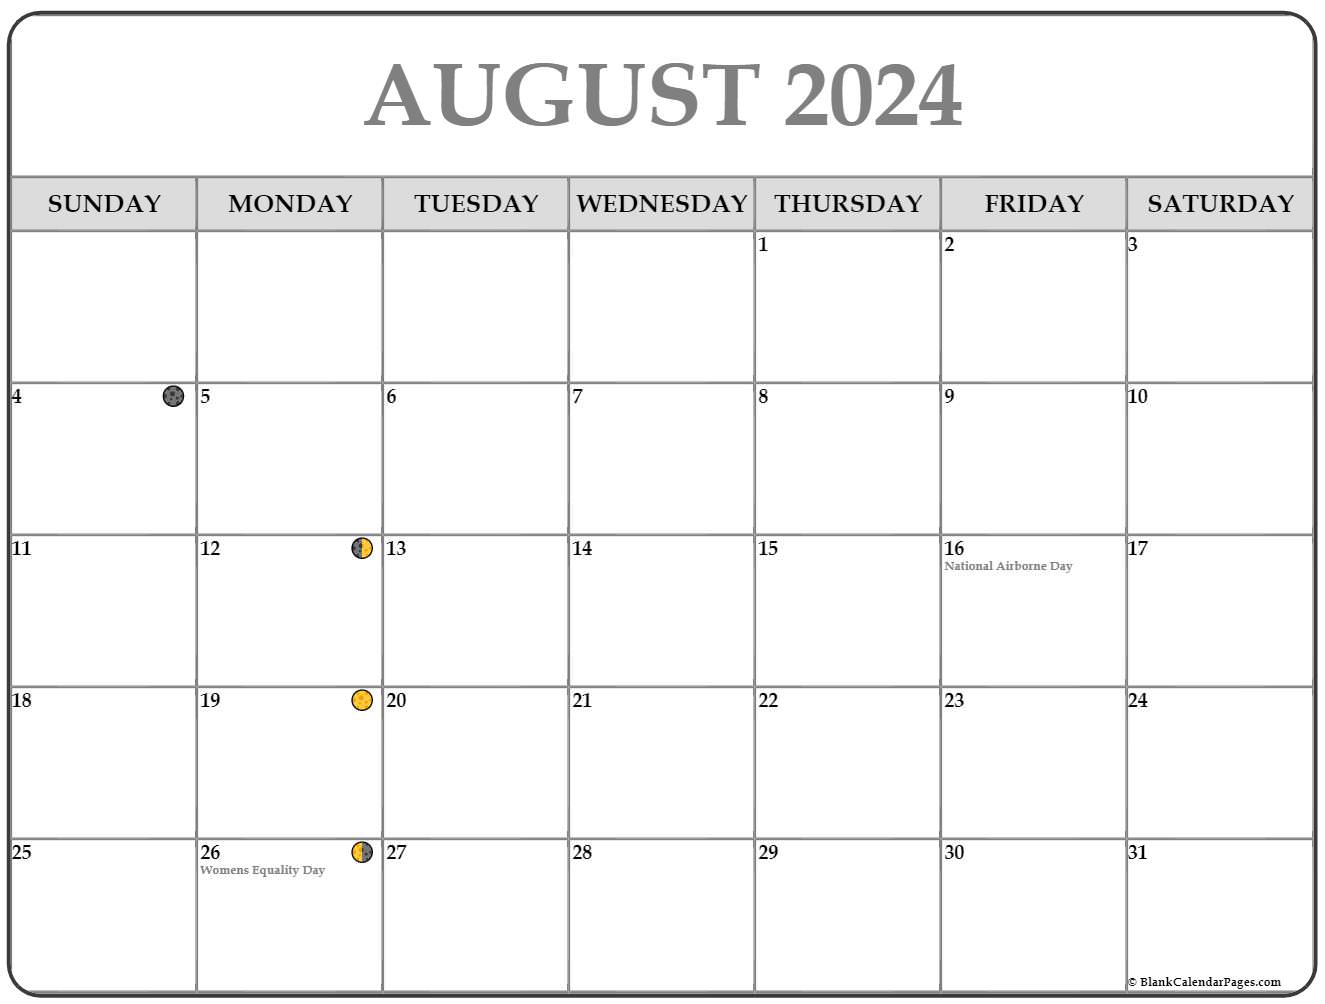 Moon Calendar August 2021 August 2021 Lunar Calendar | Moon Phase Calendar